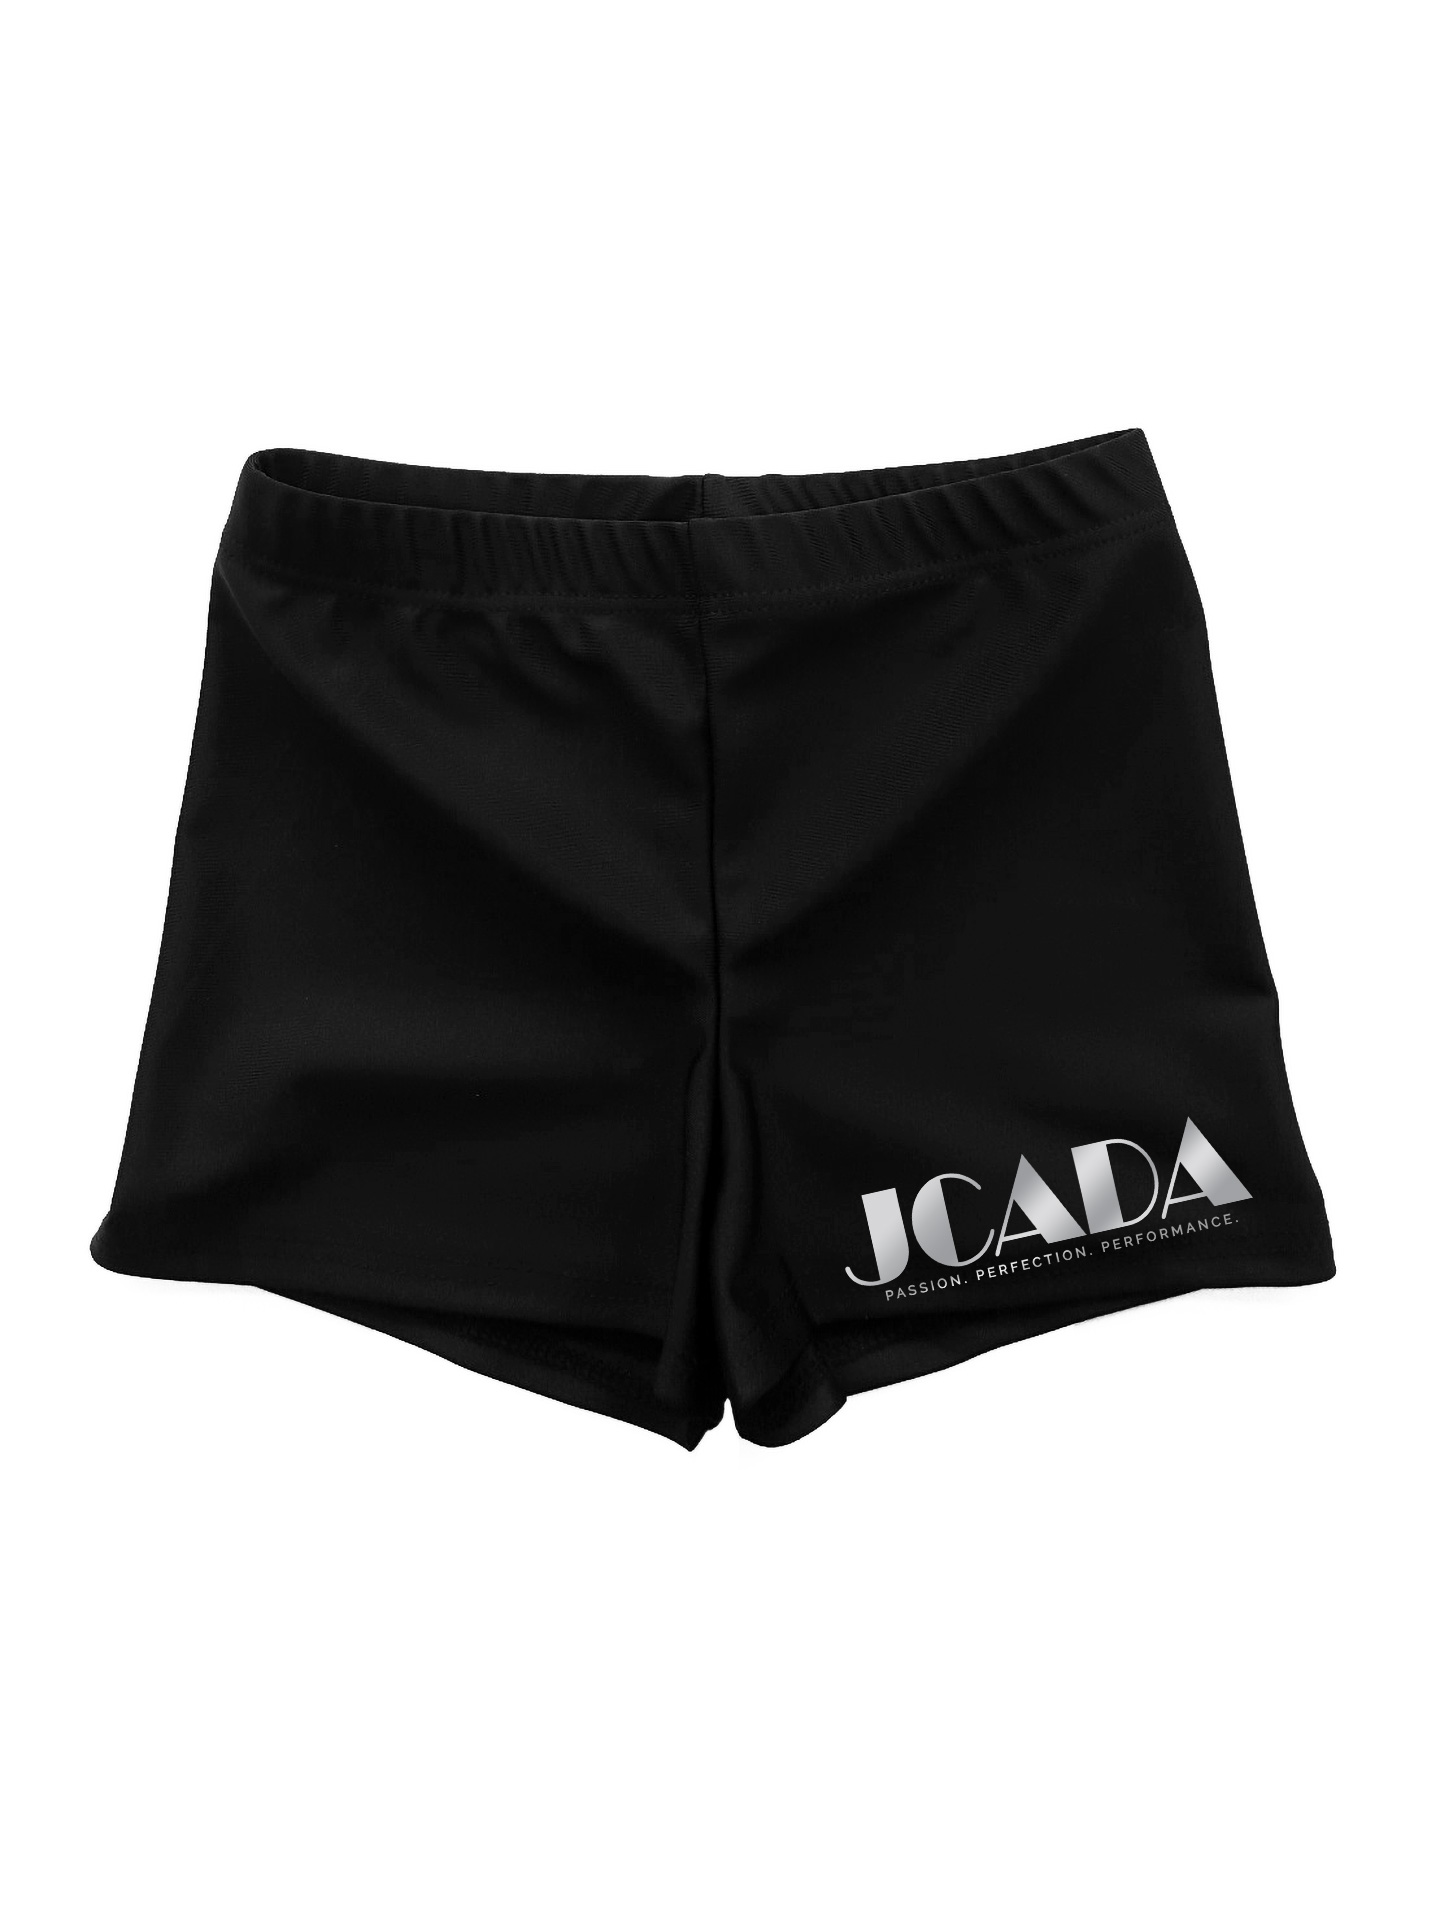 JCADA Lycra Shorts | Rock the Dragon